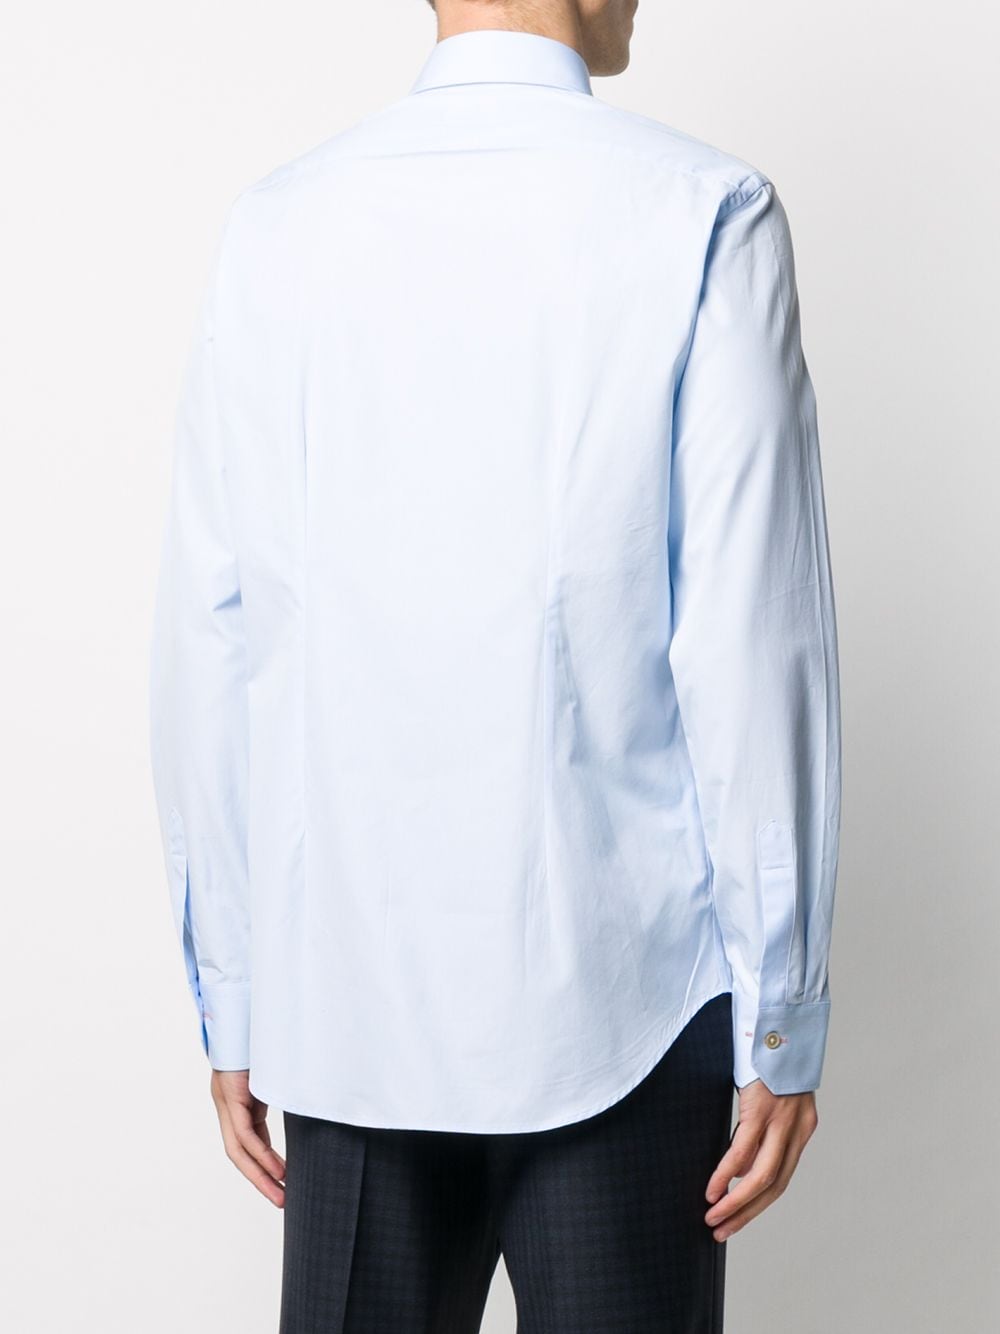 Paul Smith Spread Collar Cotton Shirt - Farfetch